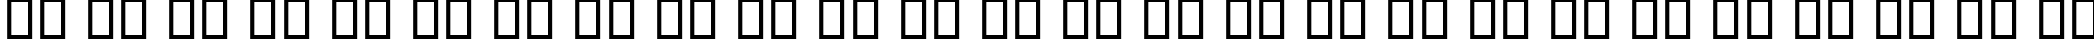 Пример написания английского алфавита шрифтом B Mehr Bold